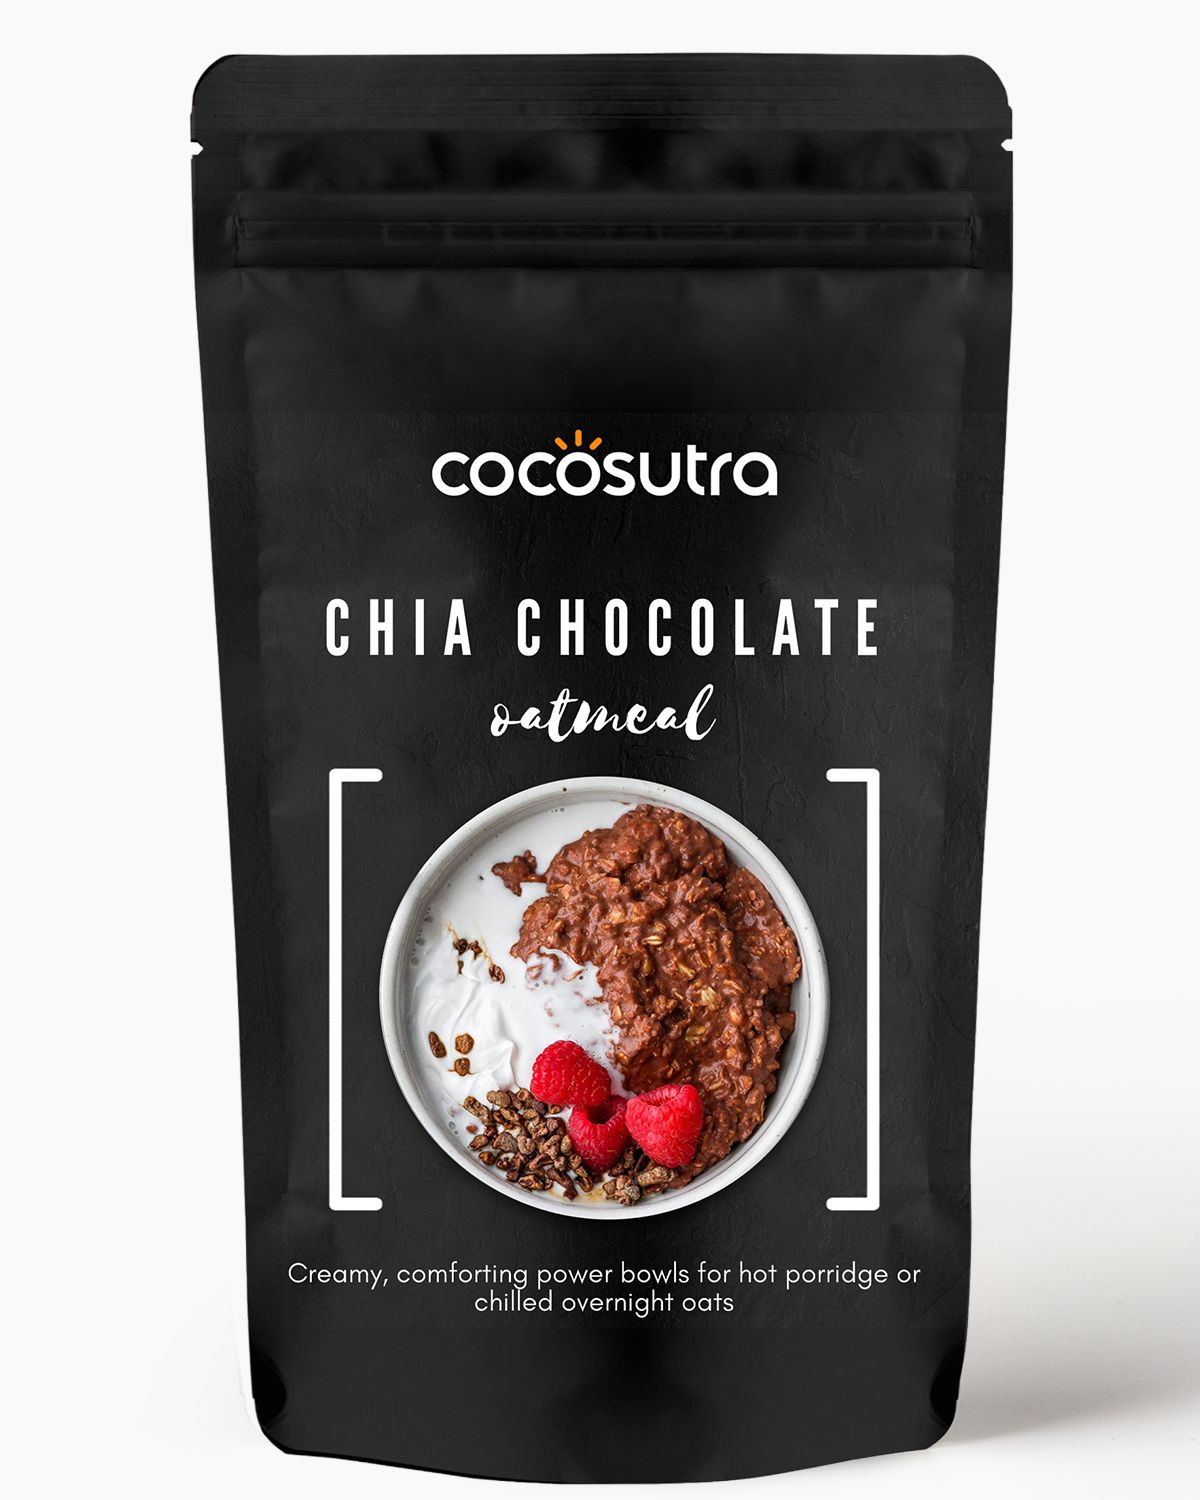 Cocosutra Chia Chocolate Oatmeal Image